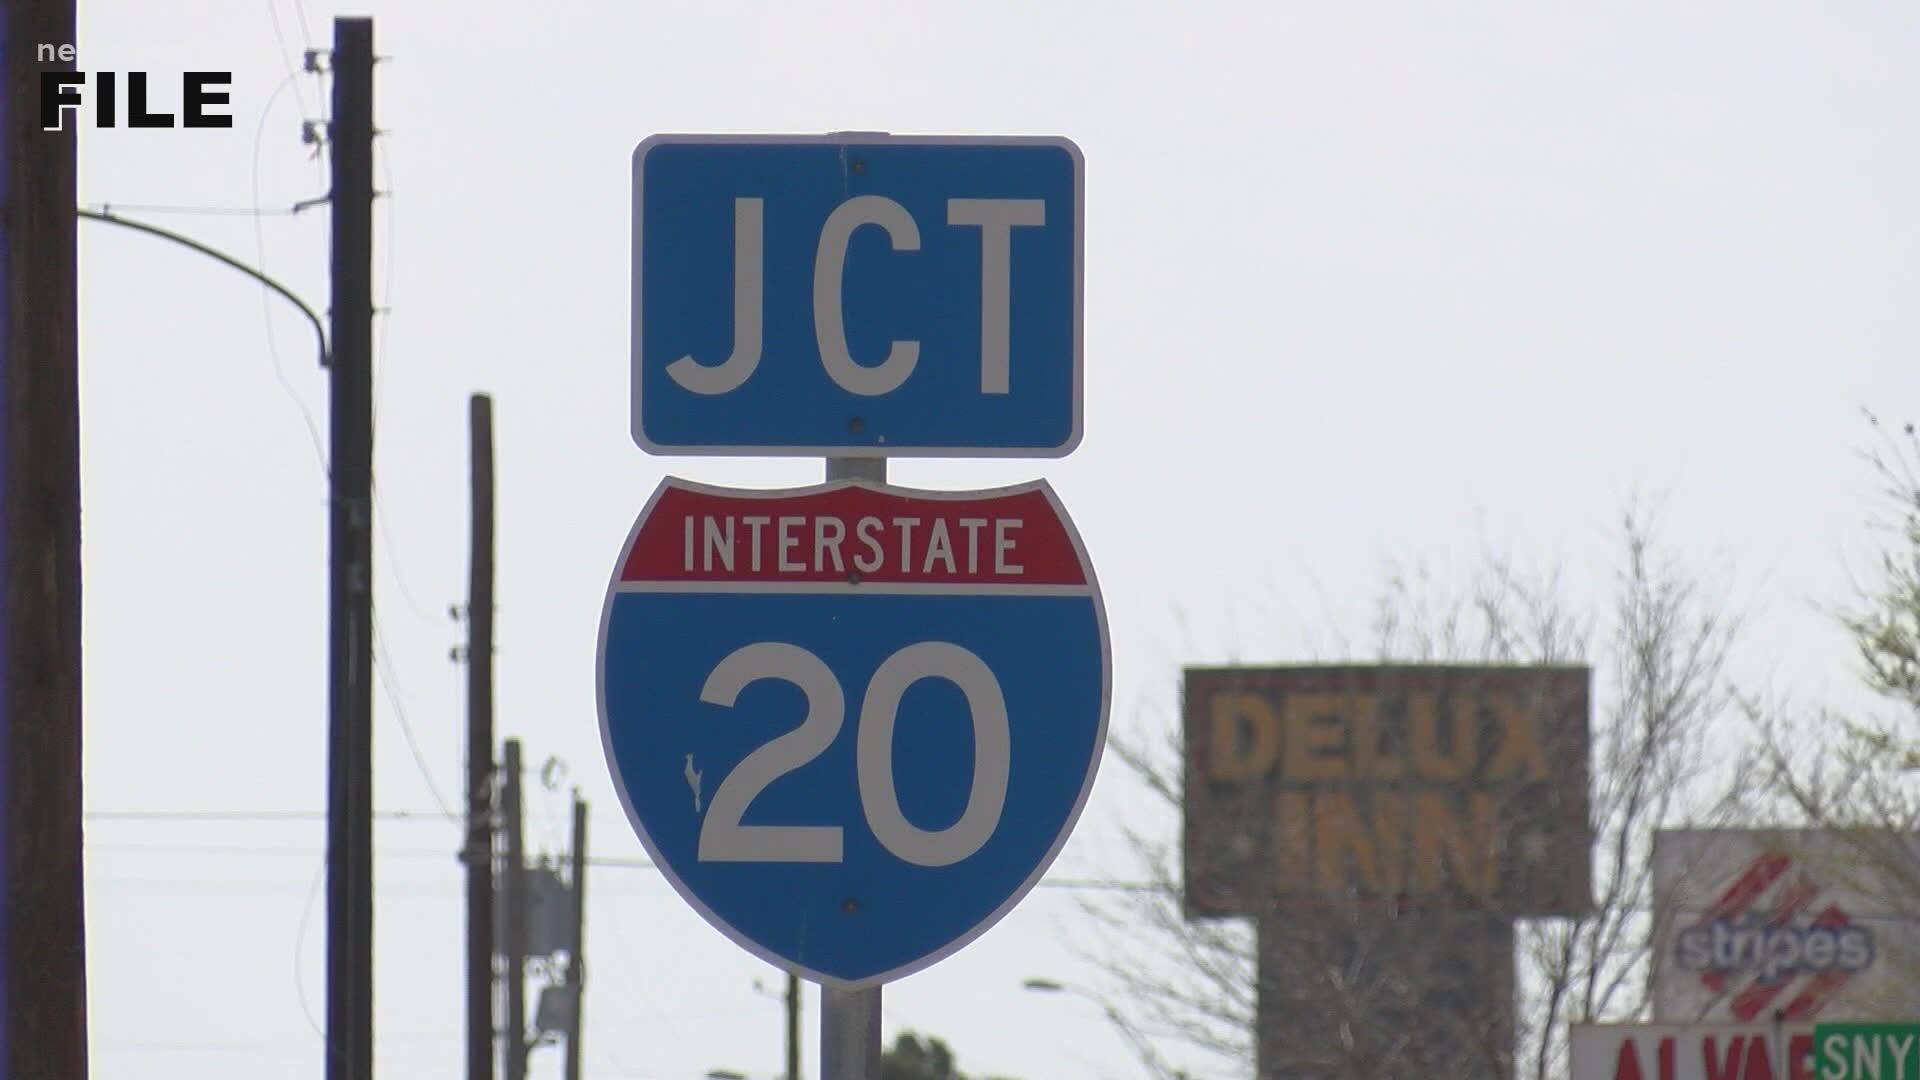 Gov. Abbott announced Thursday that TxDot has won funding for improvements on I-20 and Cotton Flat Road interchange.